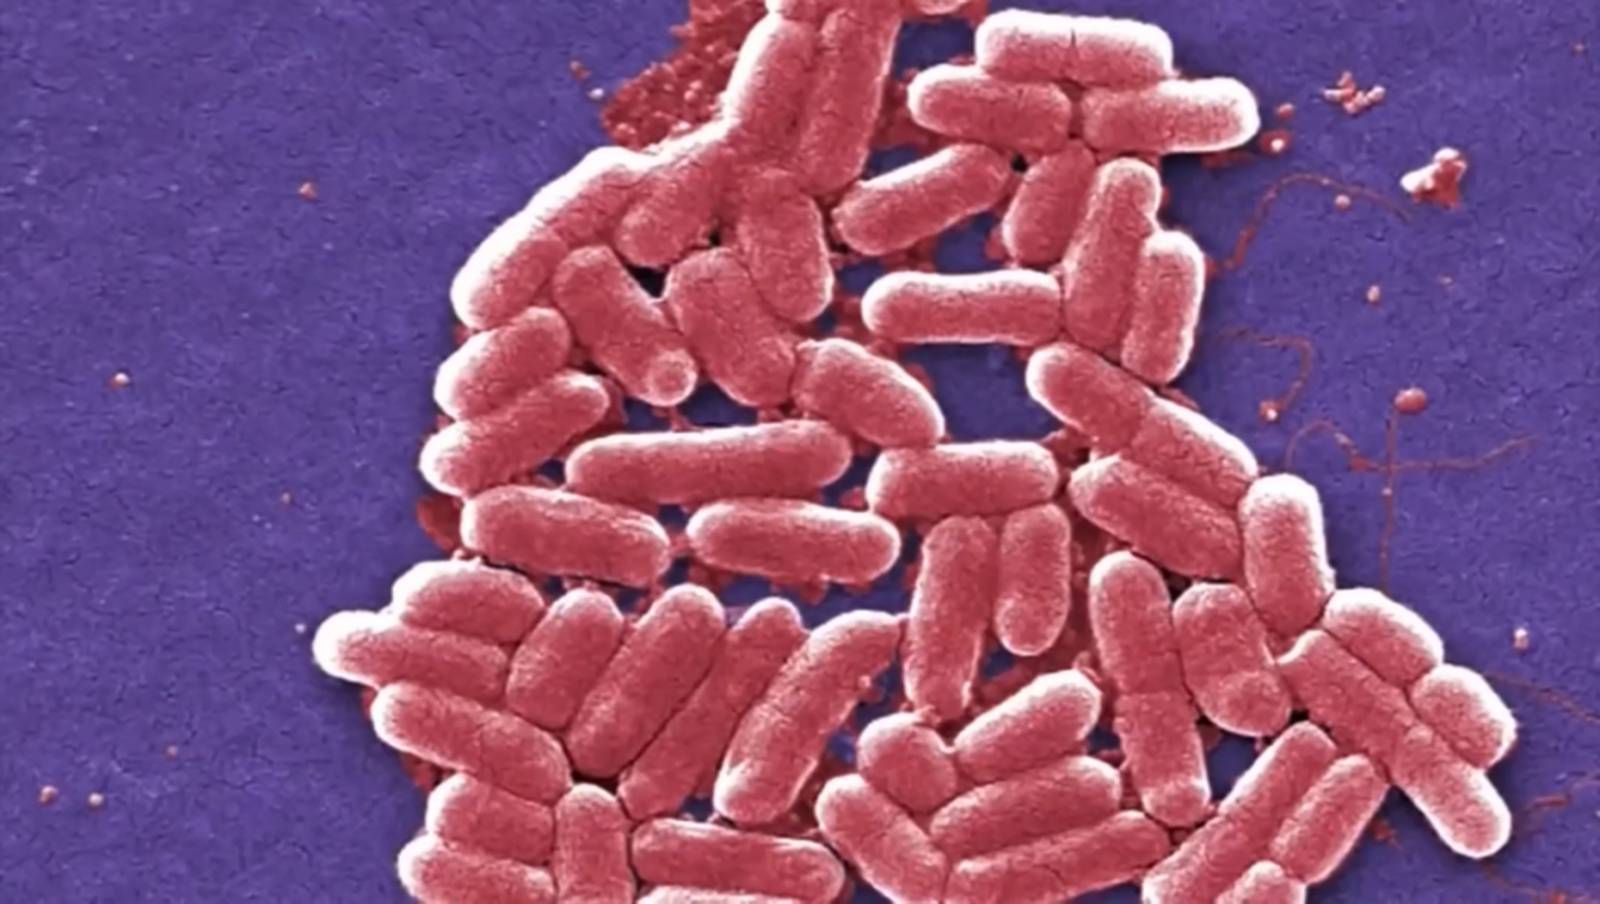 15 now infected multicounty E. coli outbreak linked to yogurt KIRO 7